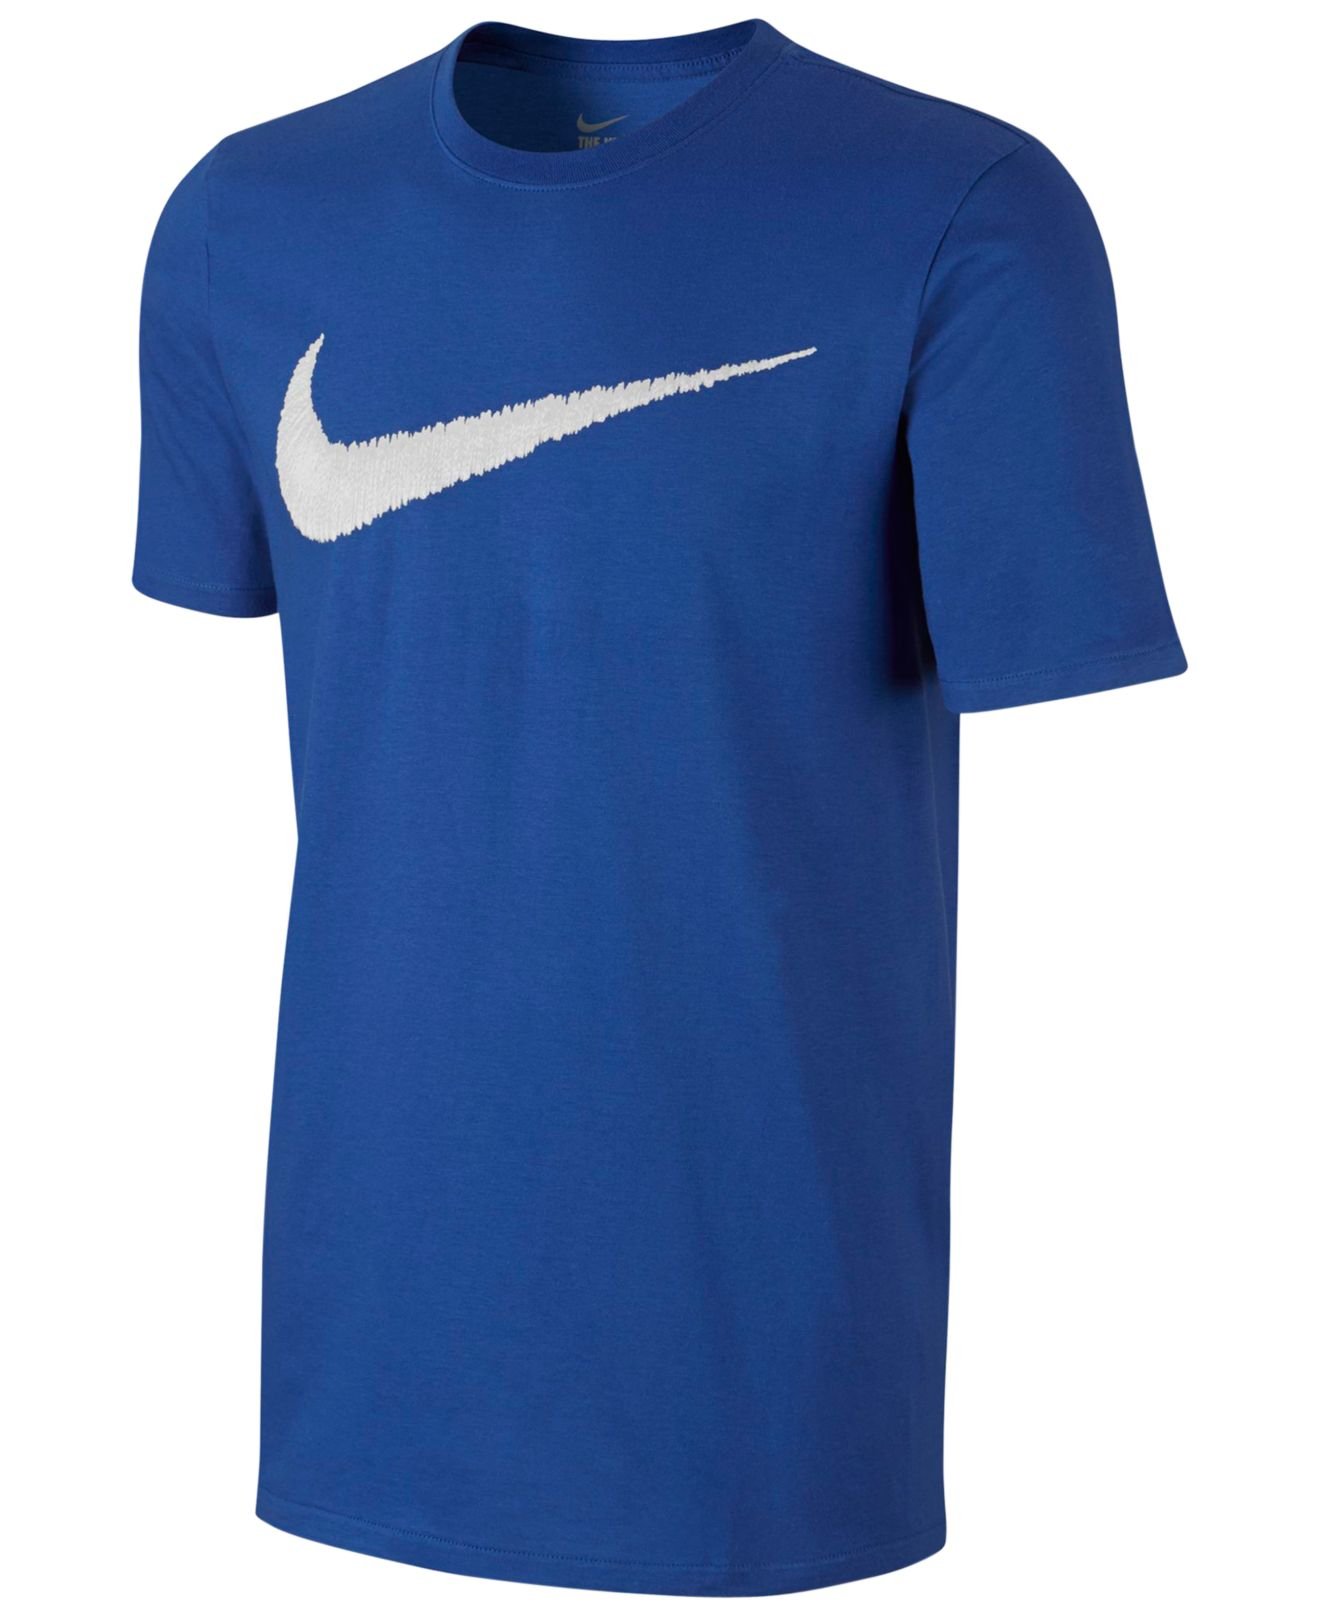 Lyst - Nike Men's Hangtag Swoosh T-shirt in Blue for Men